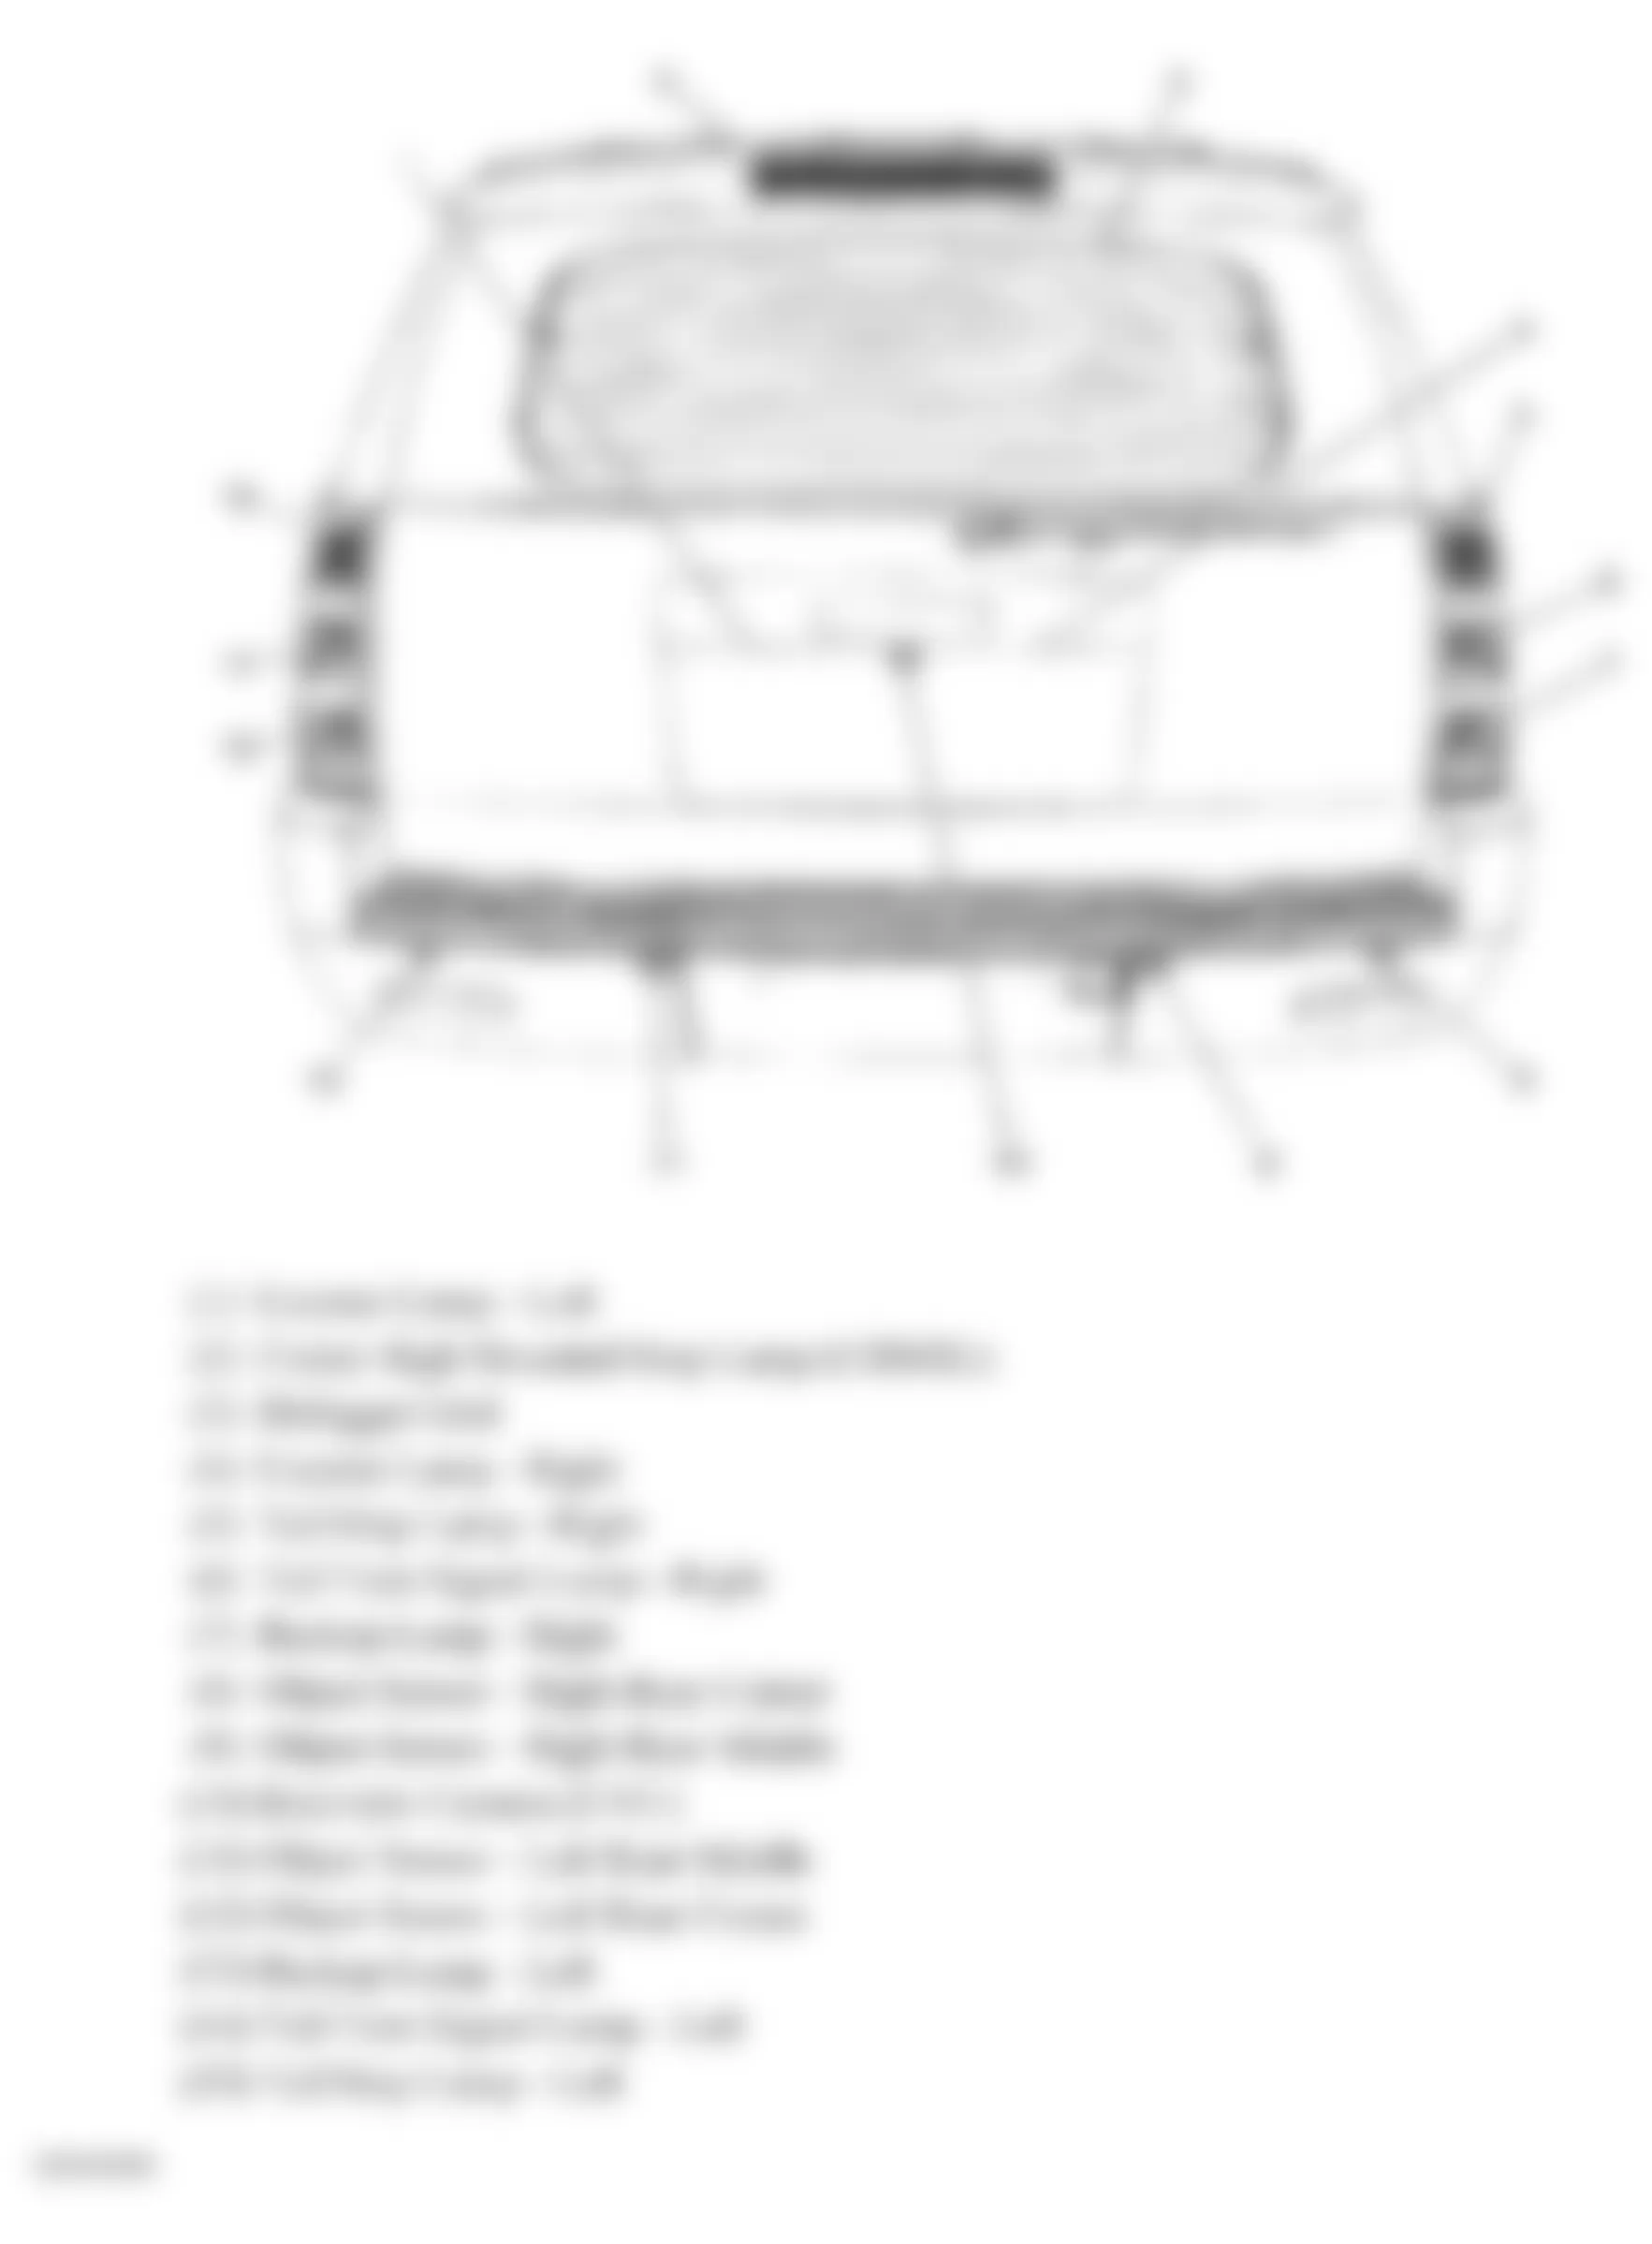 GMC Yukon Hybrid Denali 2010 - Component Locations -  Rear Of Vehicle (Yukon W/One Piece Liftgate)